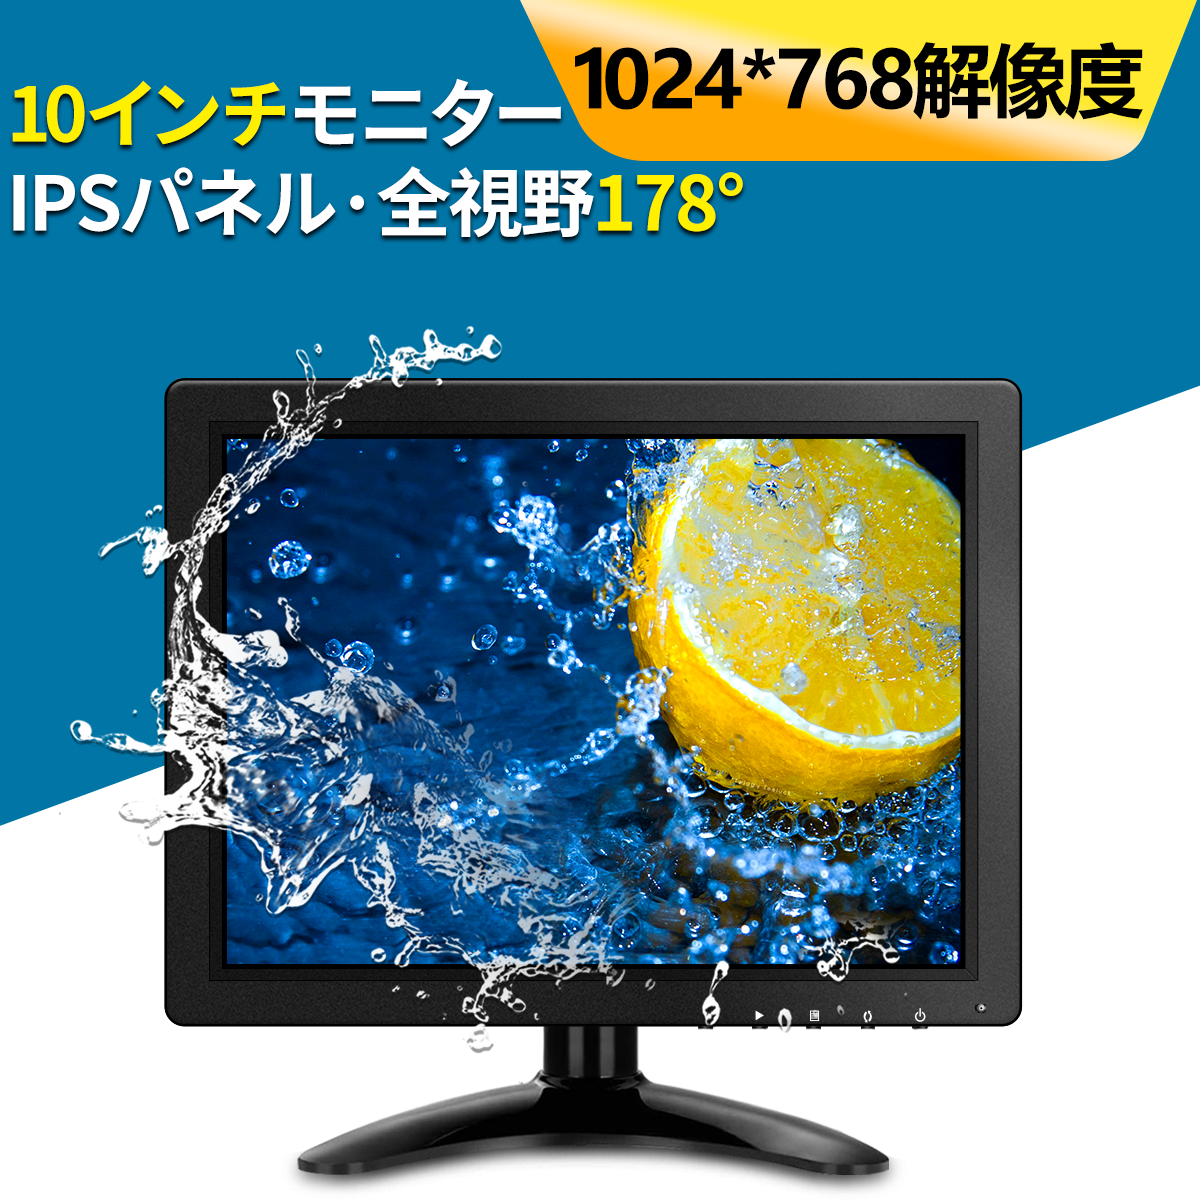 IPSパネル 全視野178° 10インチモニター 液晶画面 1024×768